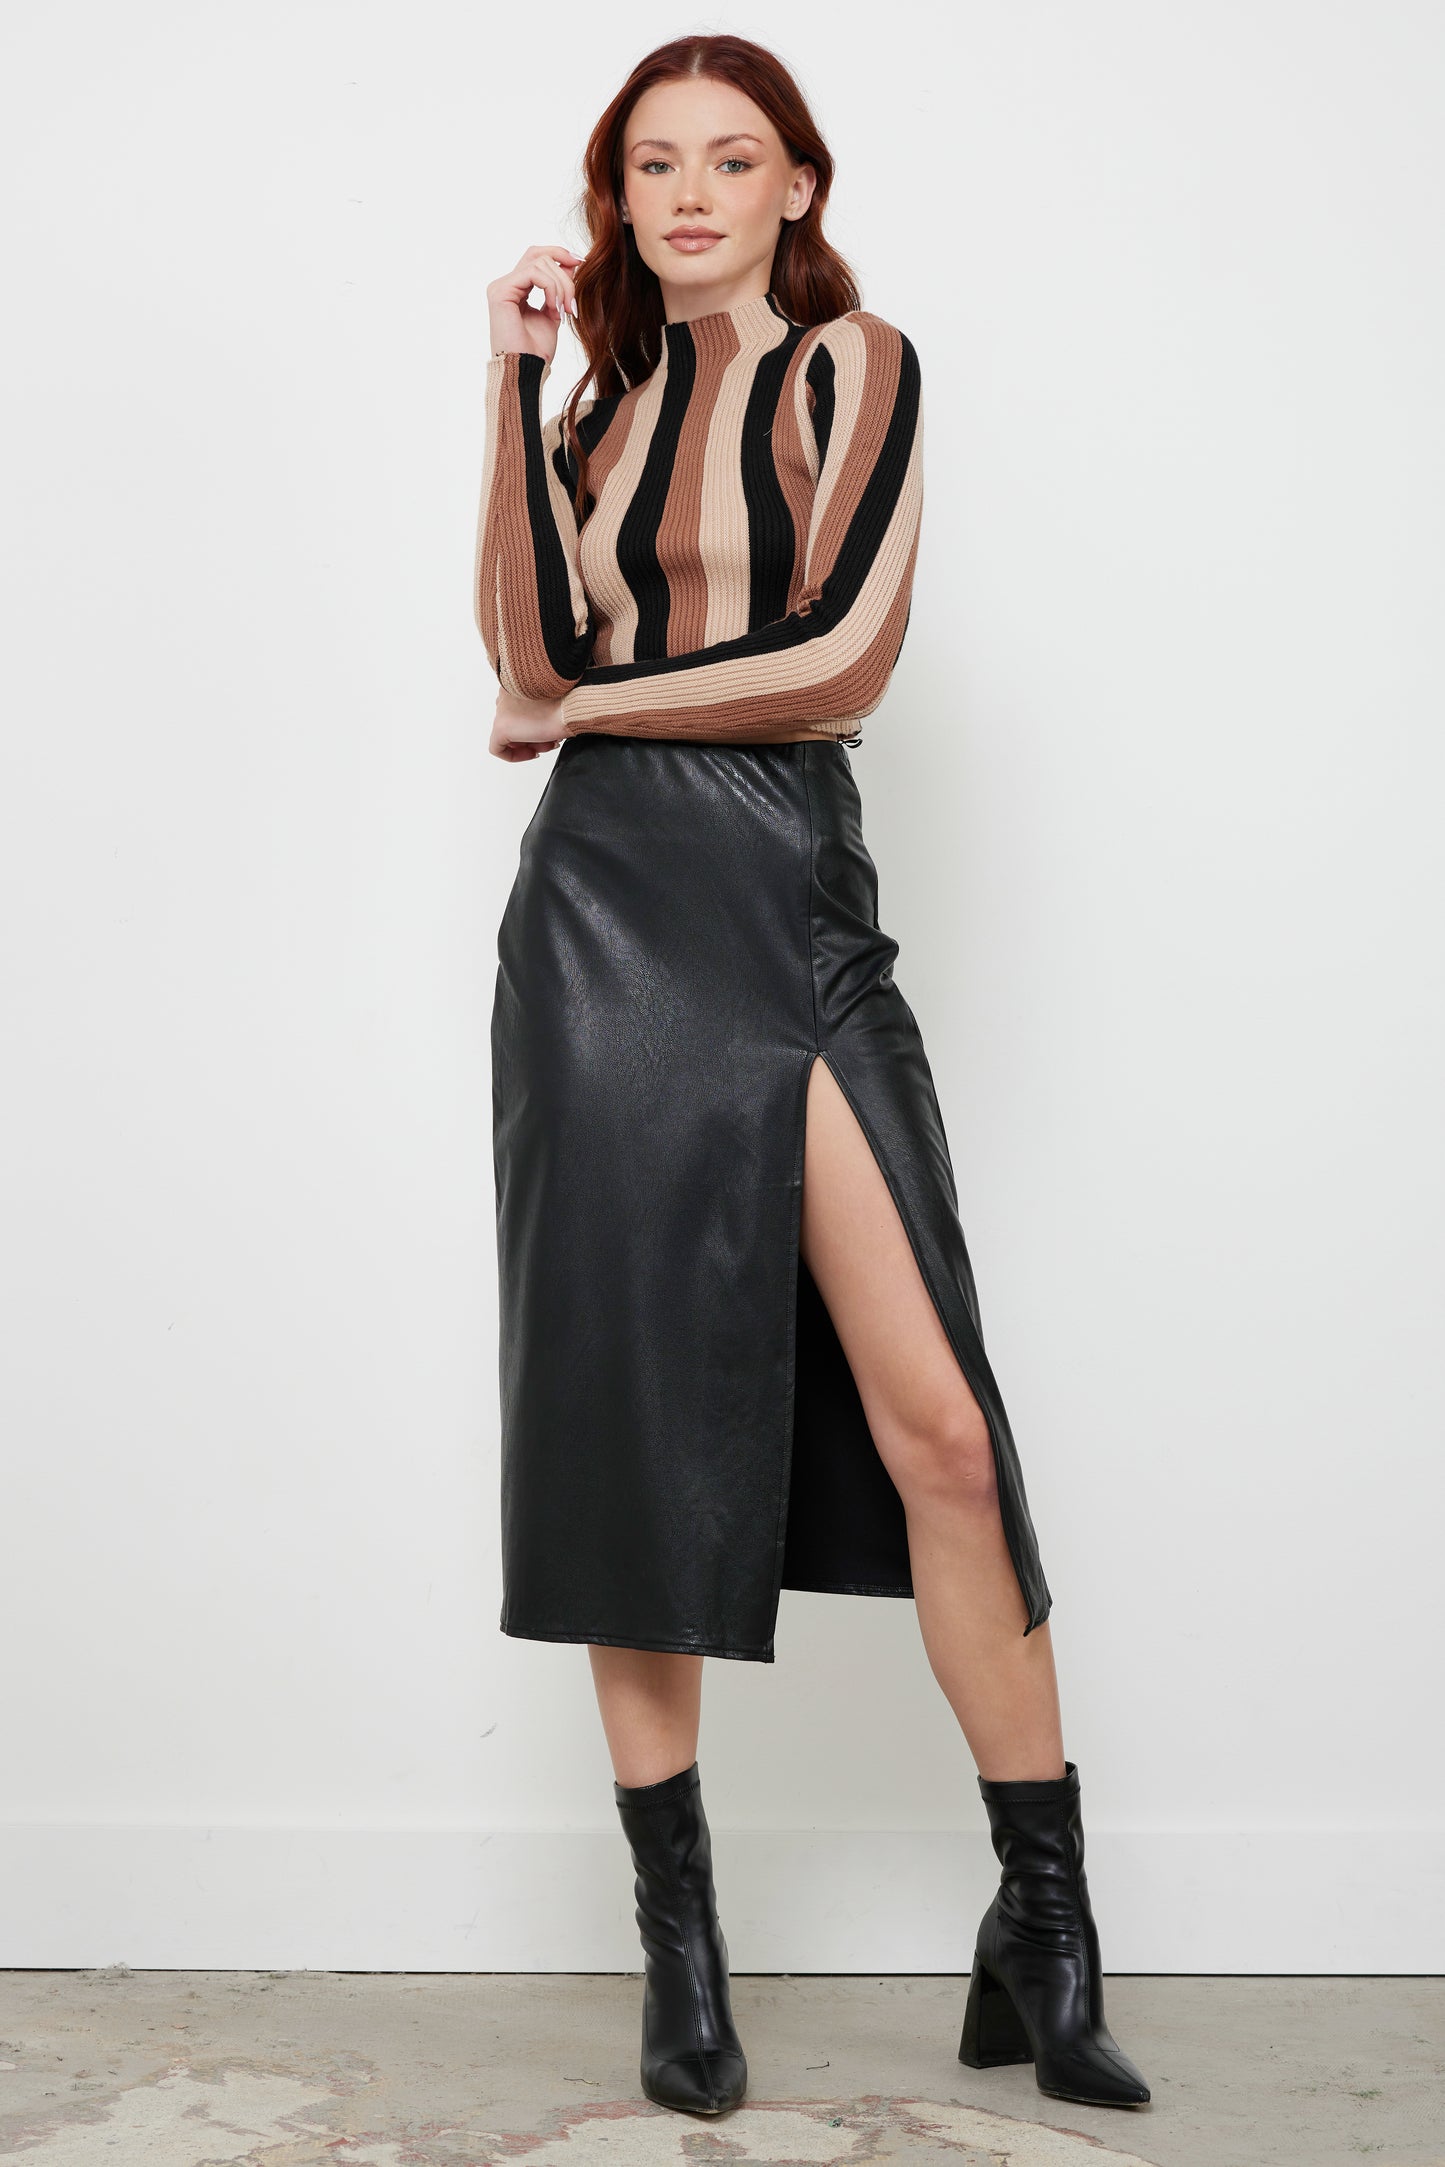 Maneater Black Leather Skirt